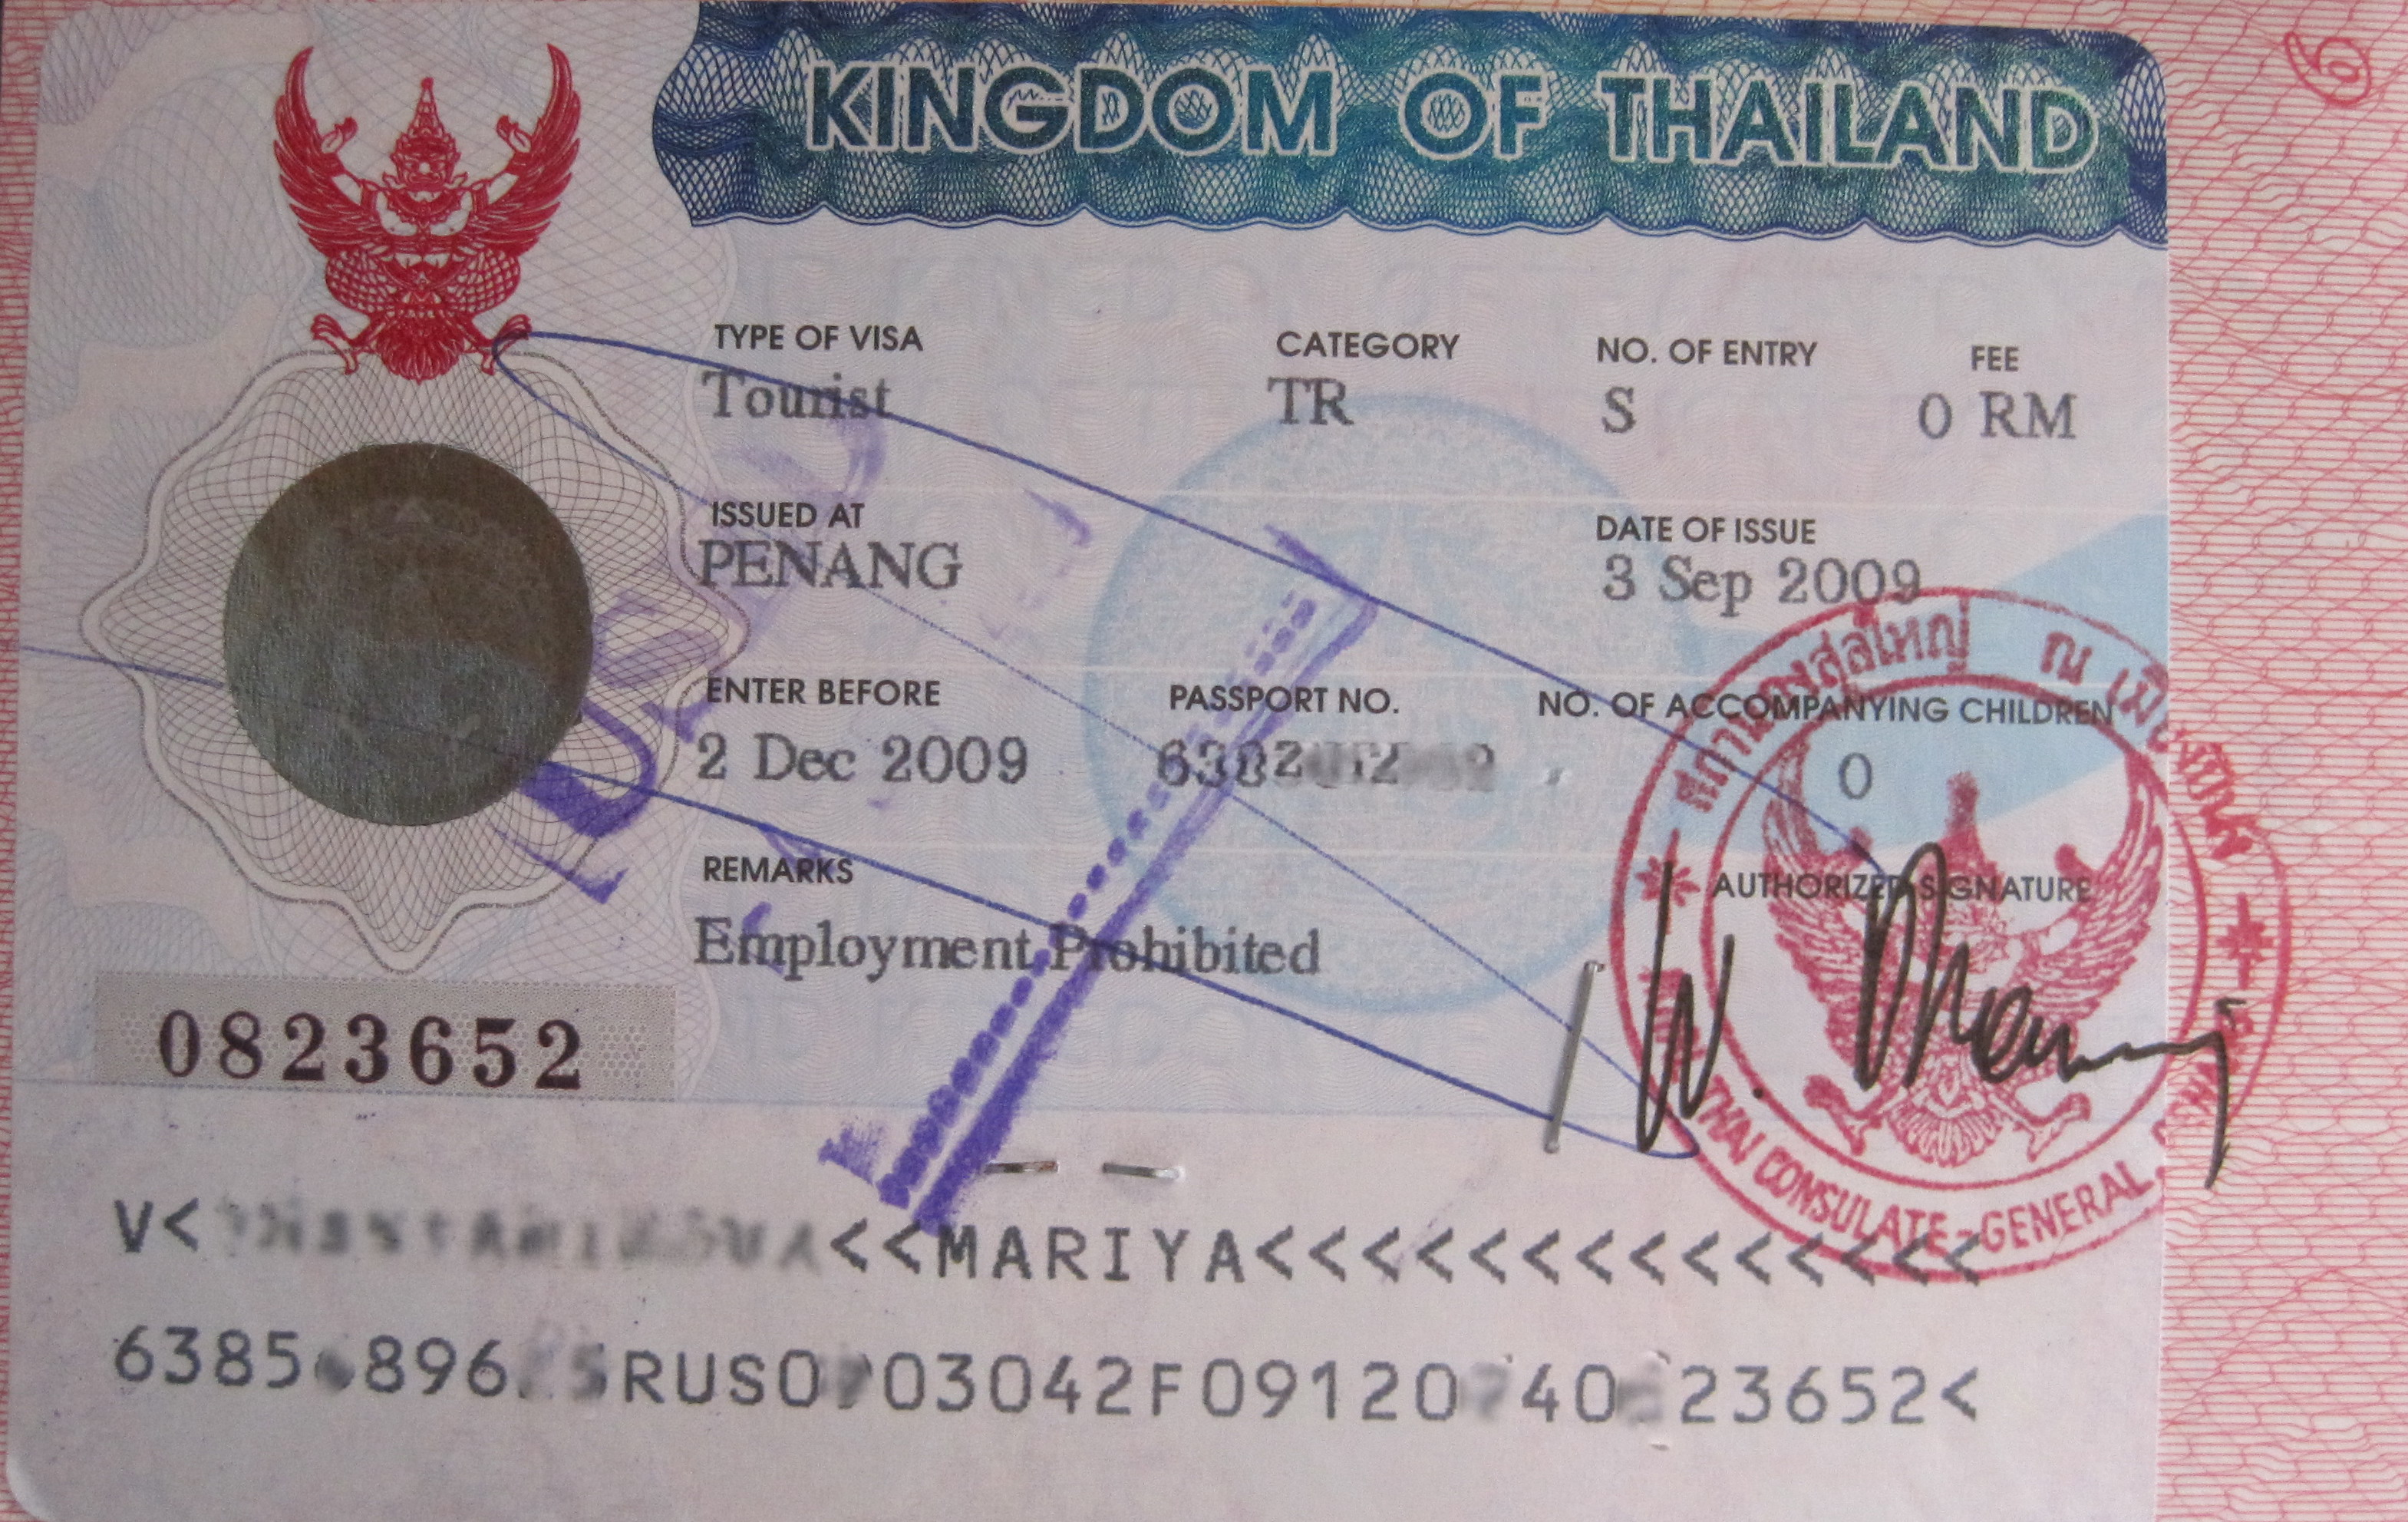 indonesian embassy in thailand visa application